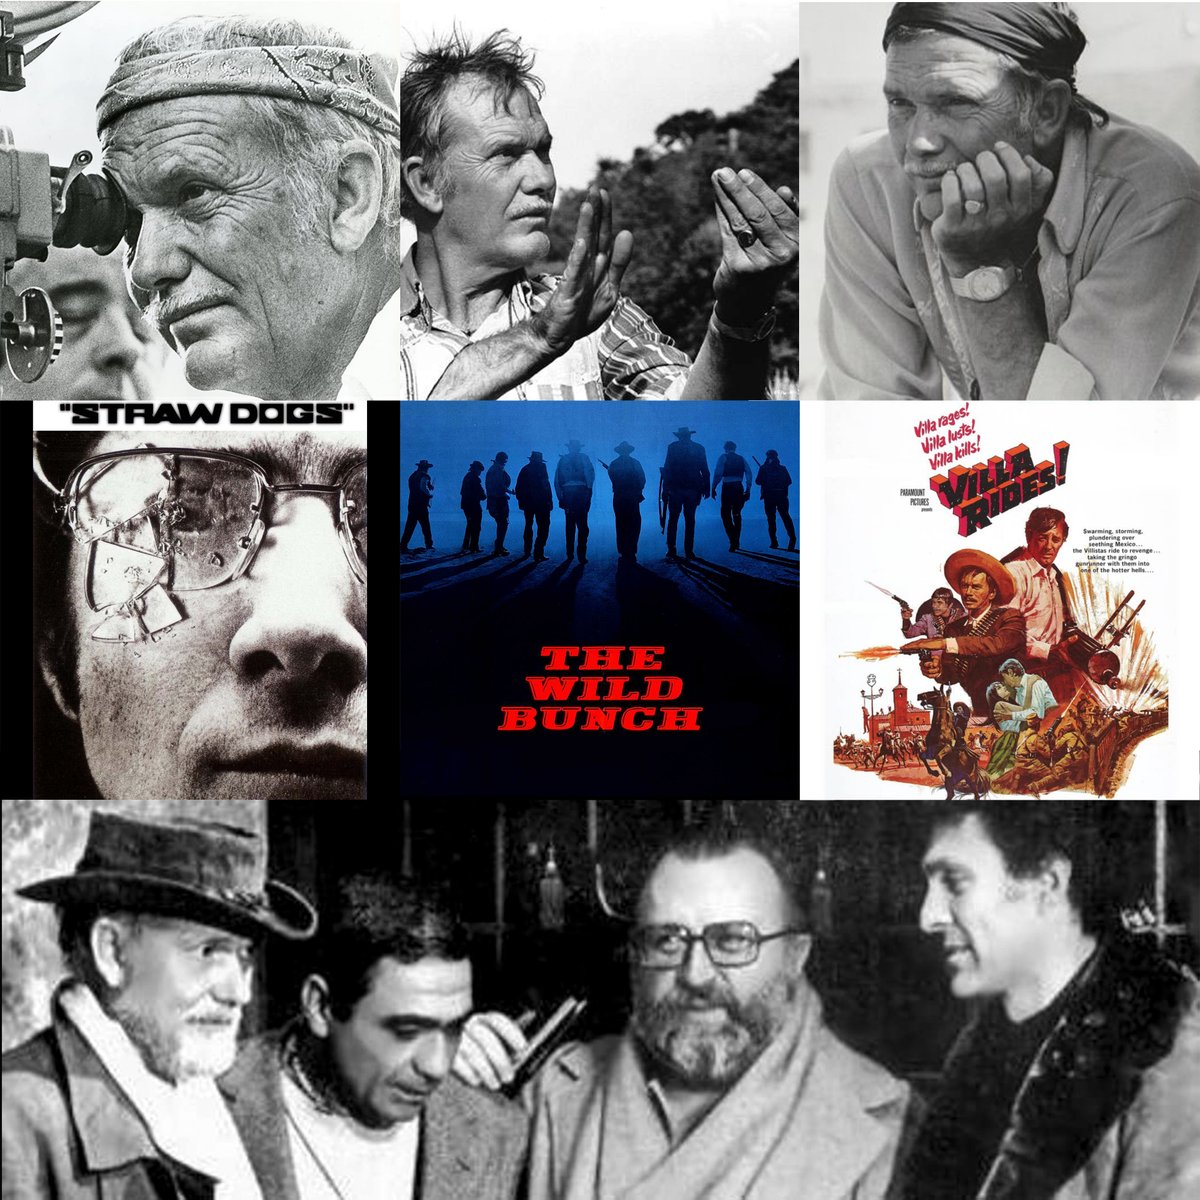 Remembering American director & screenwriter Sam Peckinpah who passed away on this day 1984.

Rest in Peace

#sampeckinpah #director #screenwriter #strawdogs #villarides #thewildbunch #thegetaway #patgarrettandbillythekid